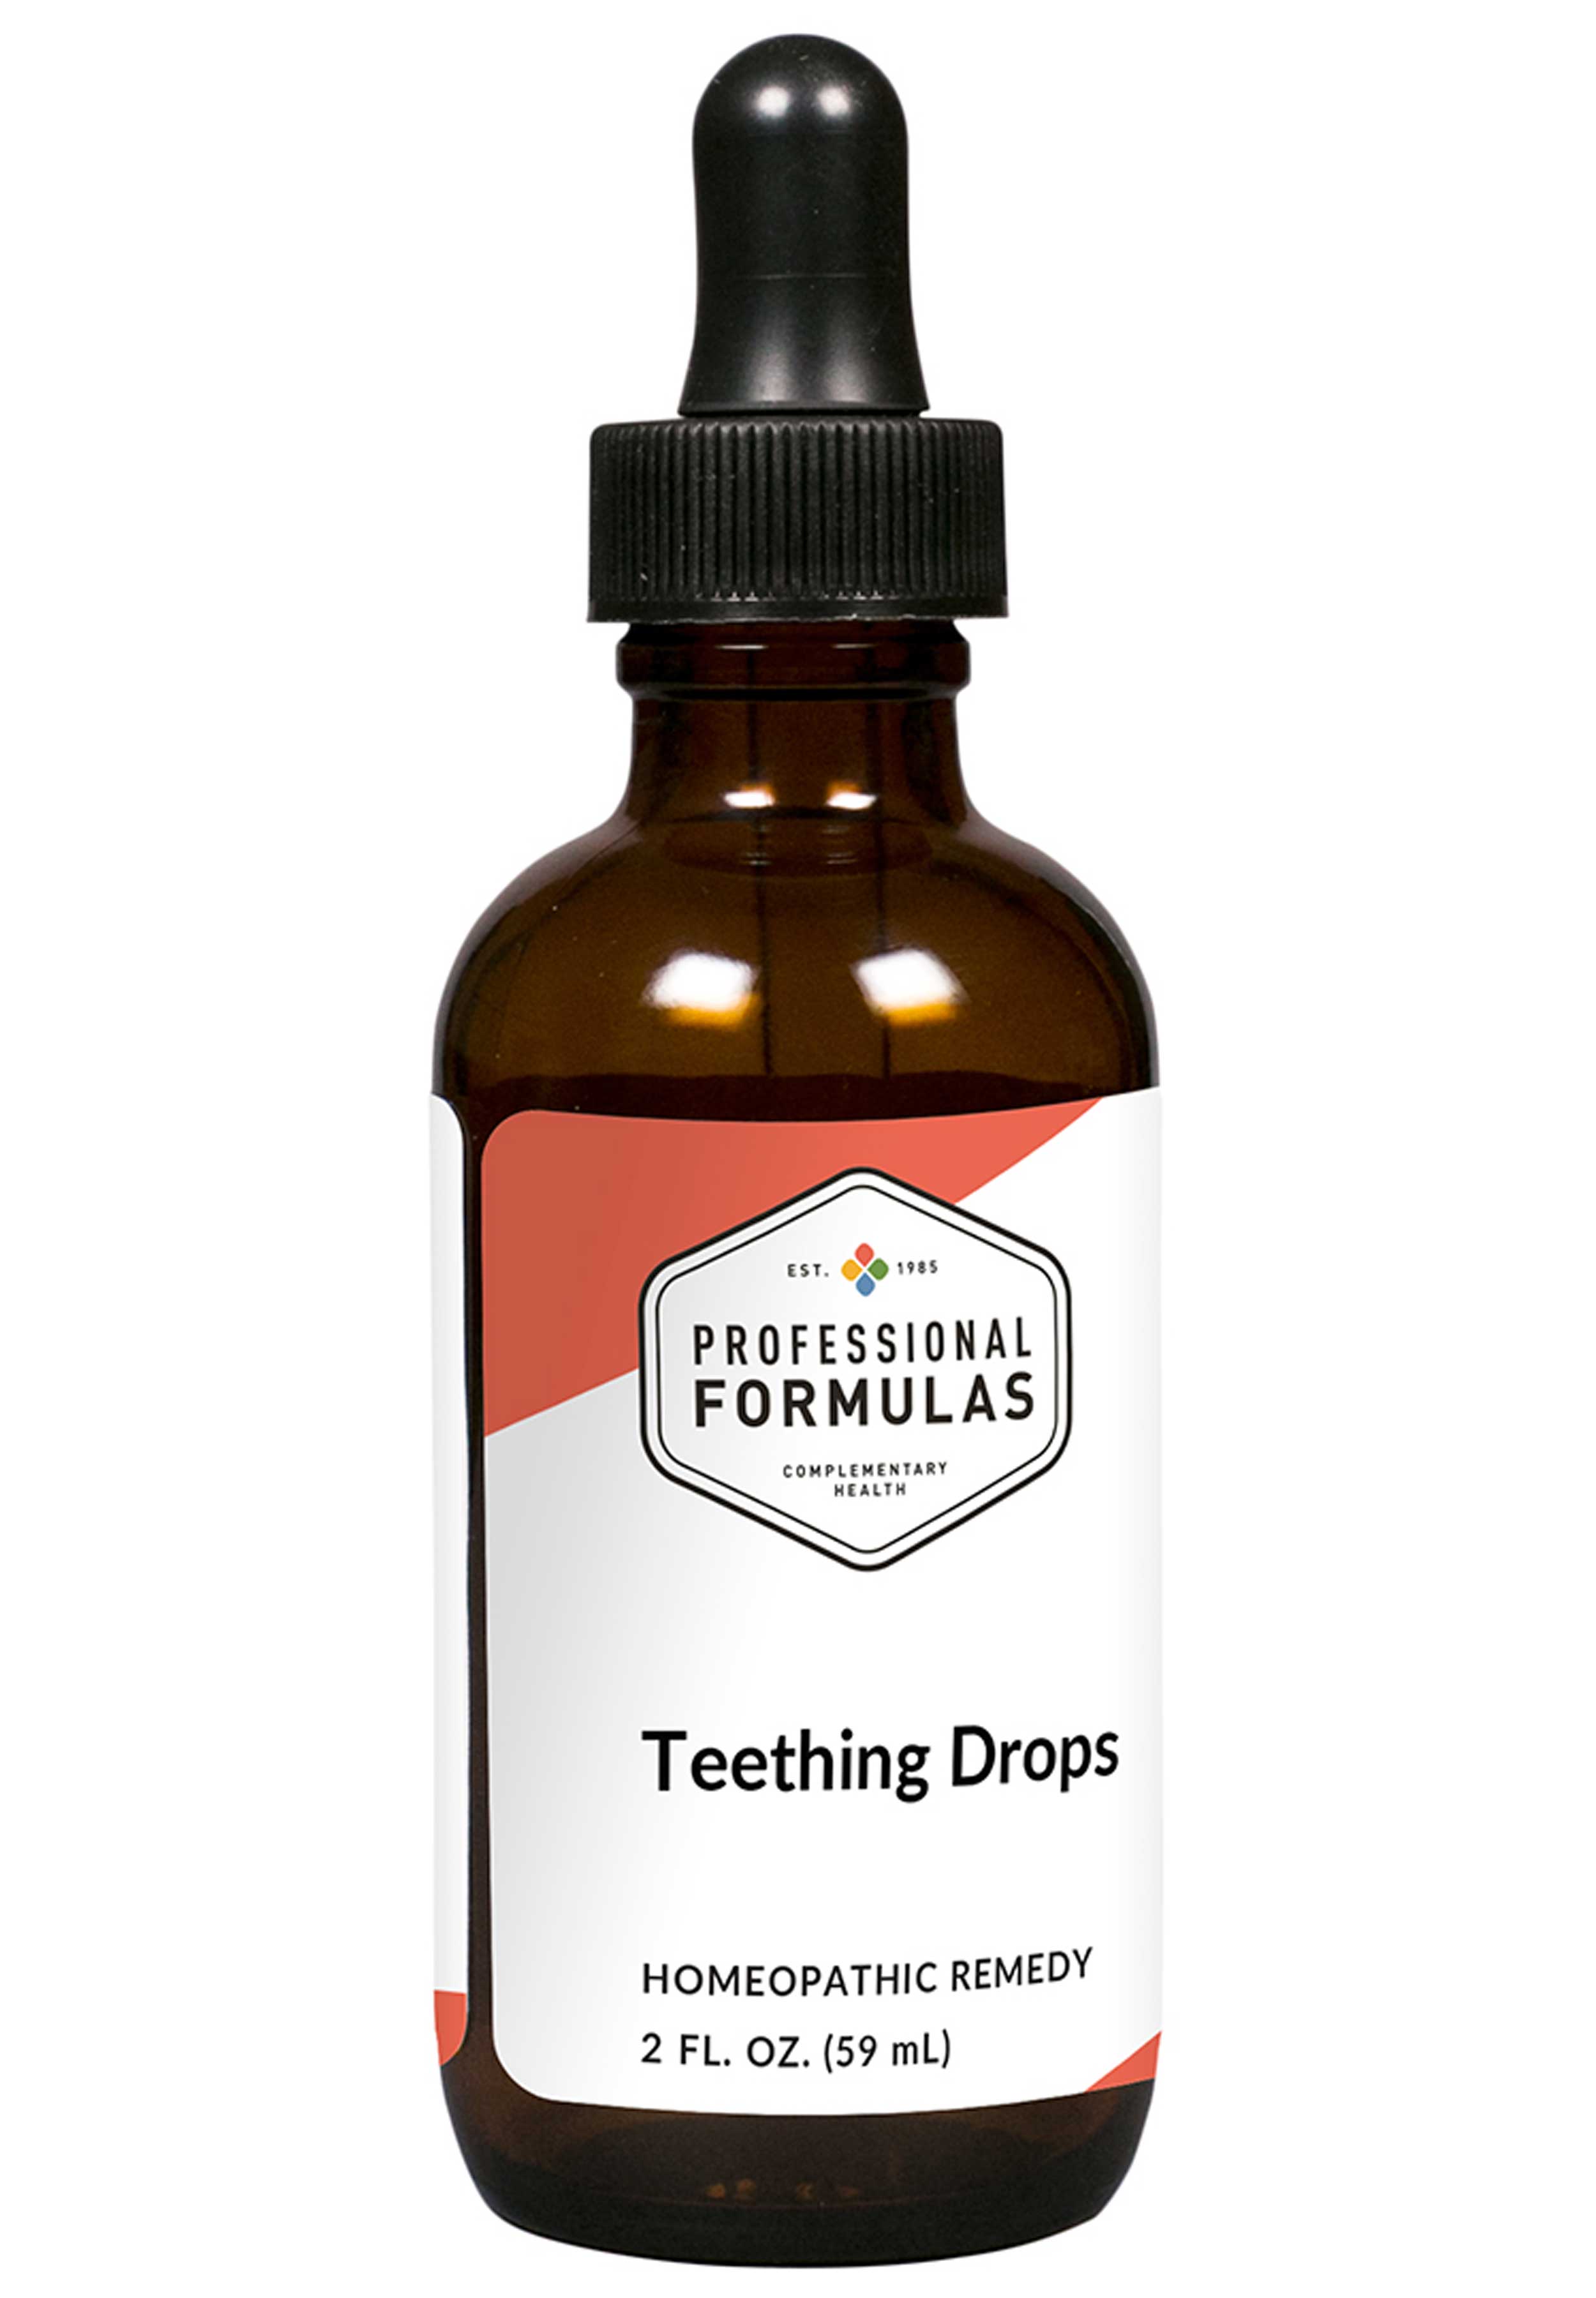 Professional Formulas Teething Drops